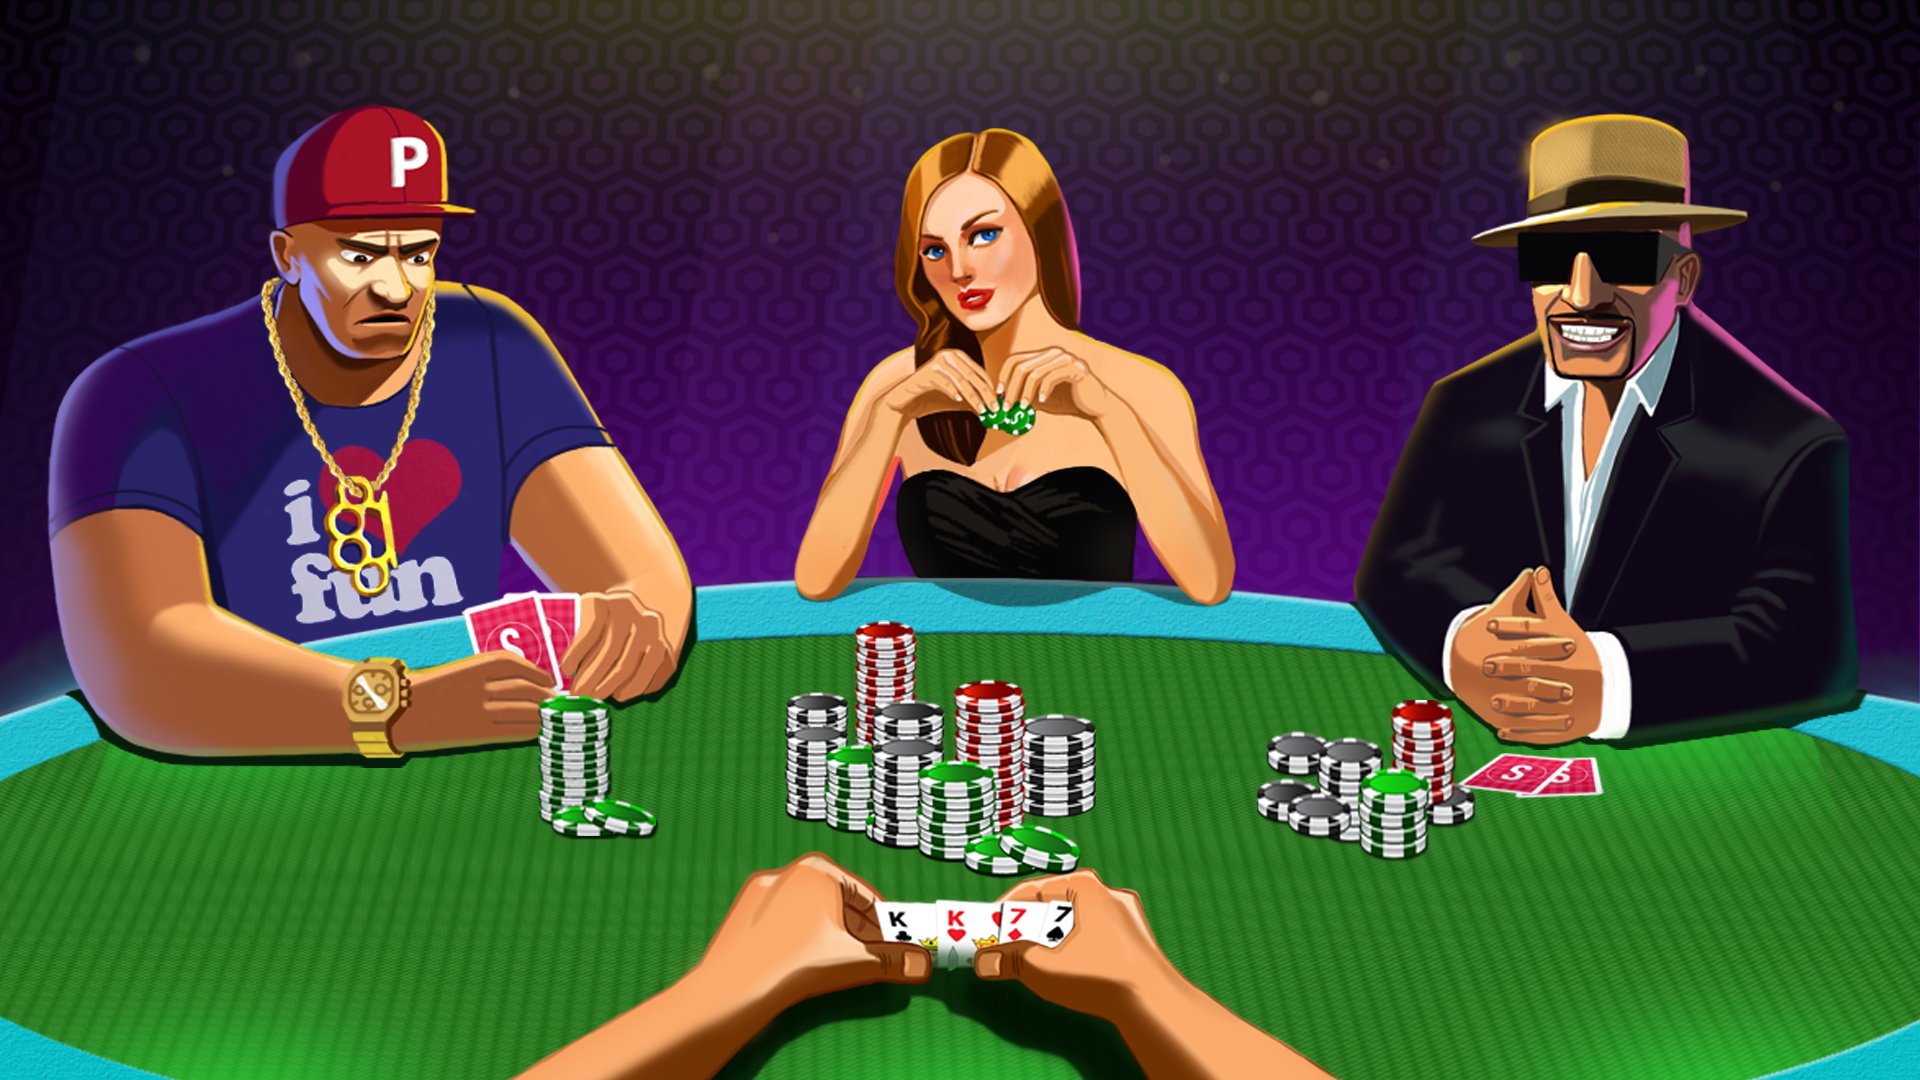 Texas Holdem Poker Free Bonus